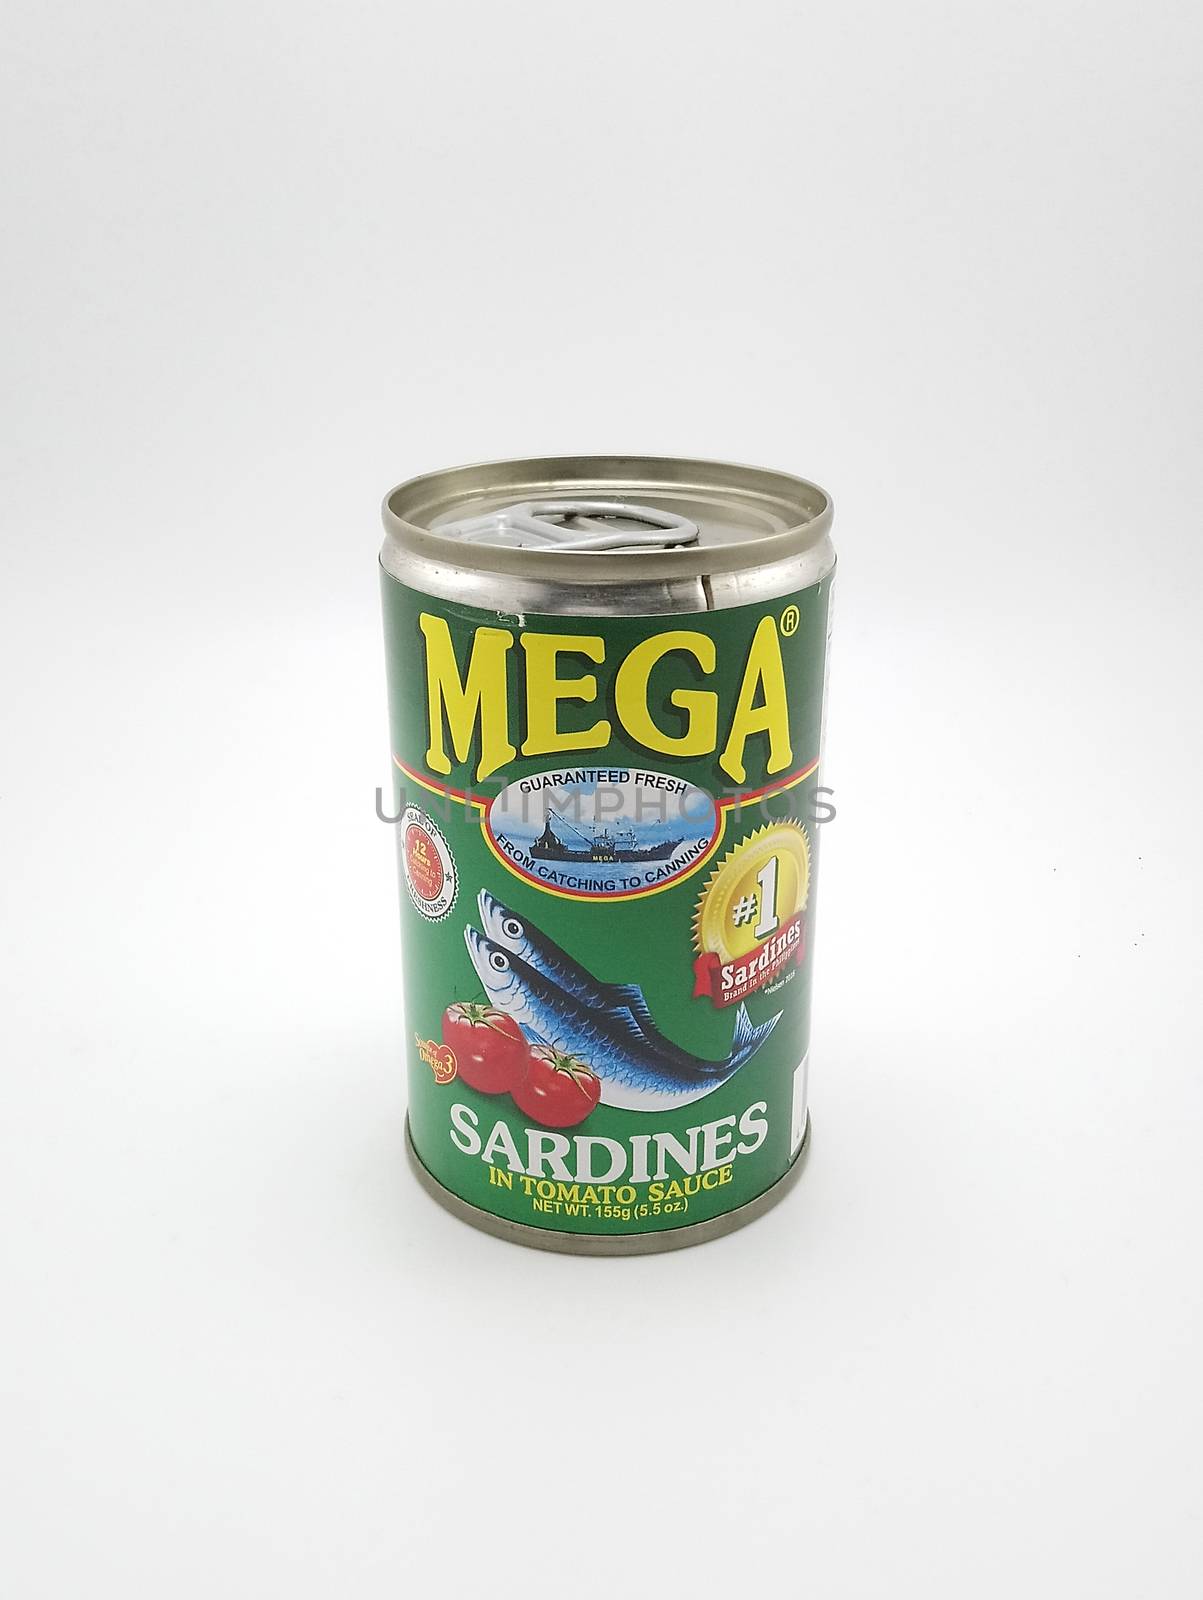 MANILA, PH - SEPT 25 - Mega sardines in tomato sauce on September 25, 2020 in Manila, Philippines.